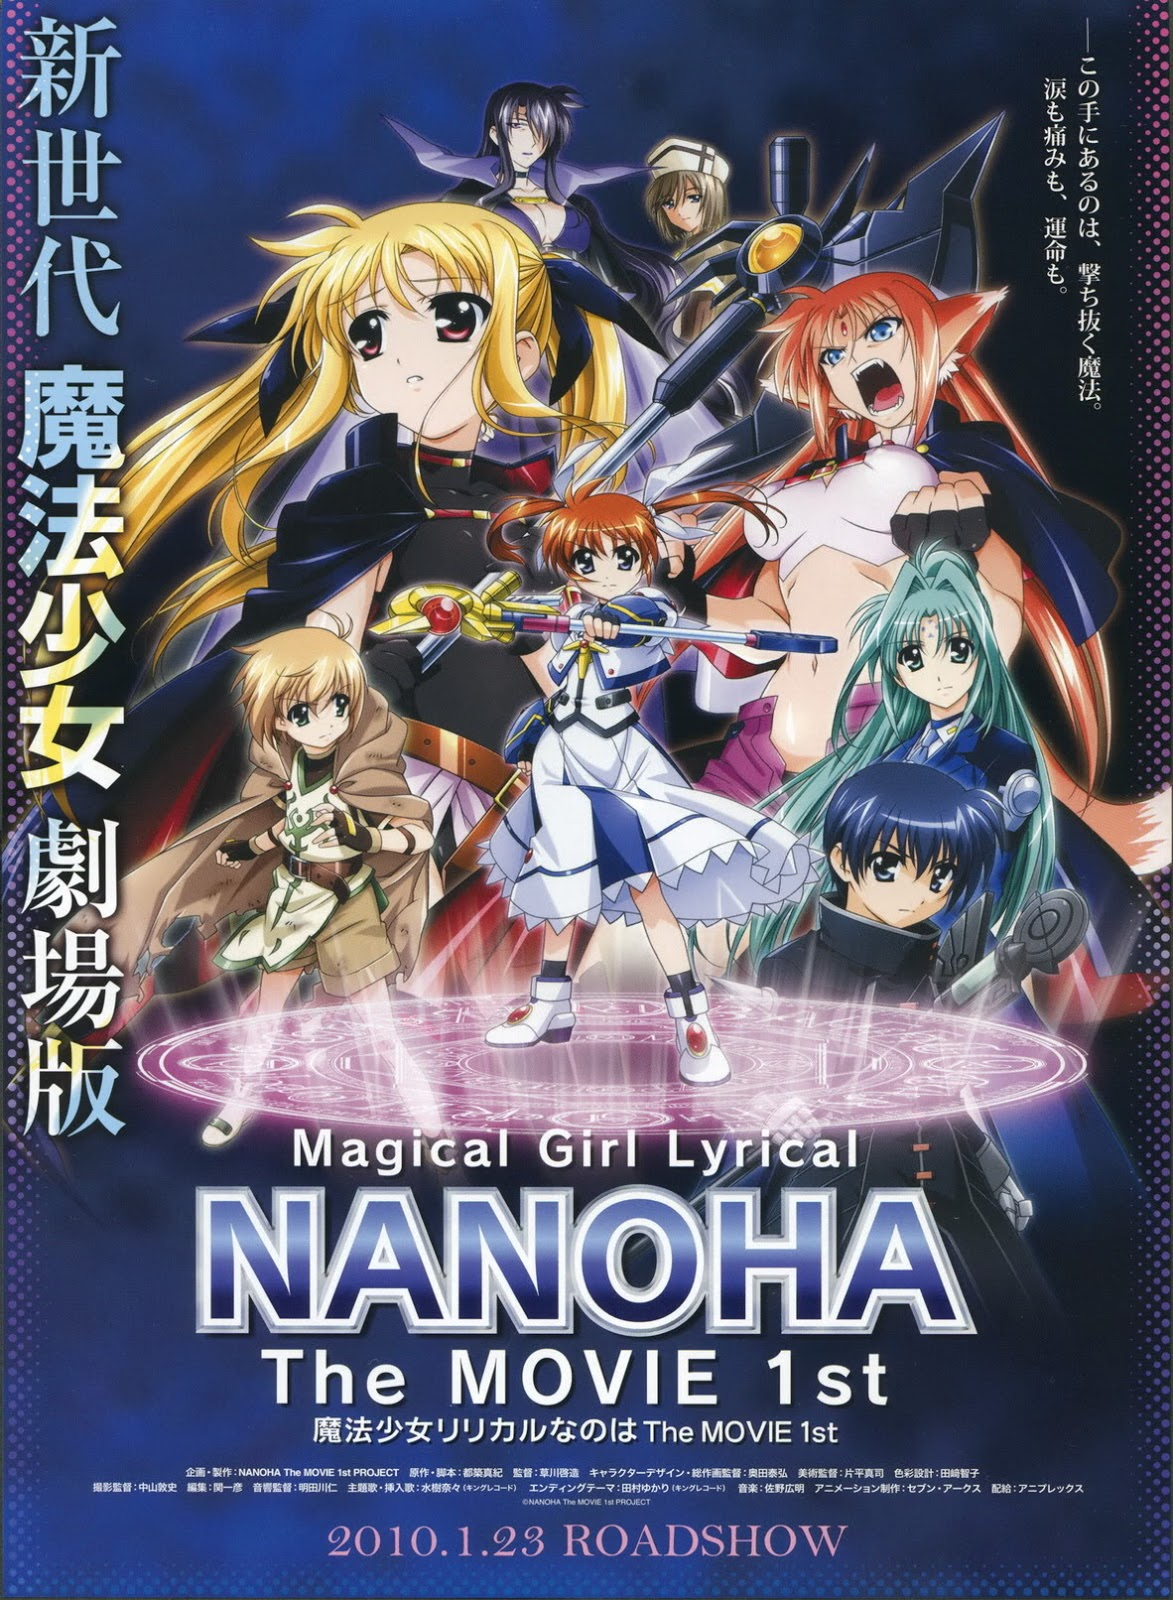 hello — Mahou Shoujo Lyrical Nanoha - Movies Review